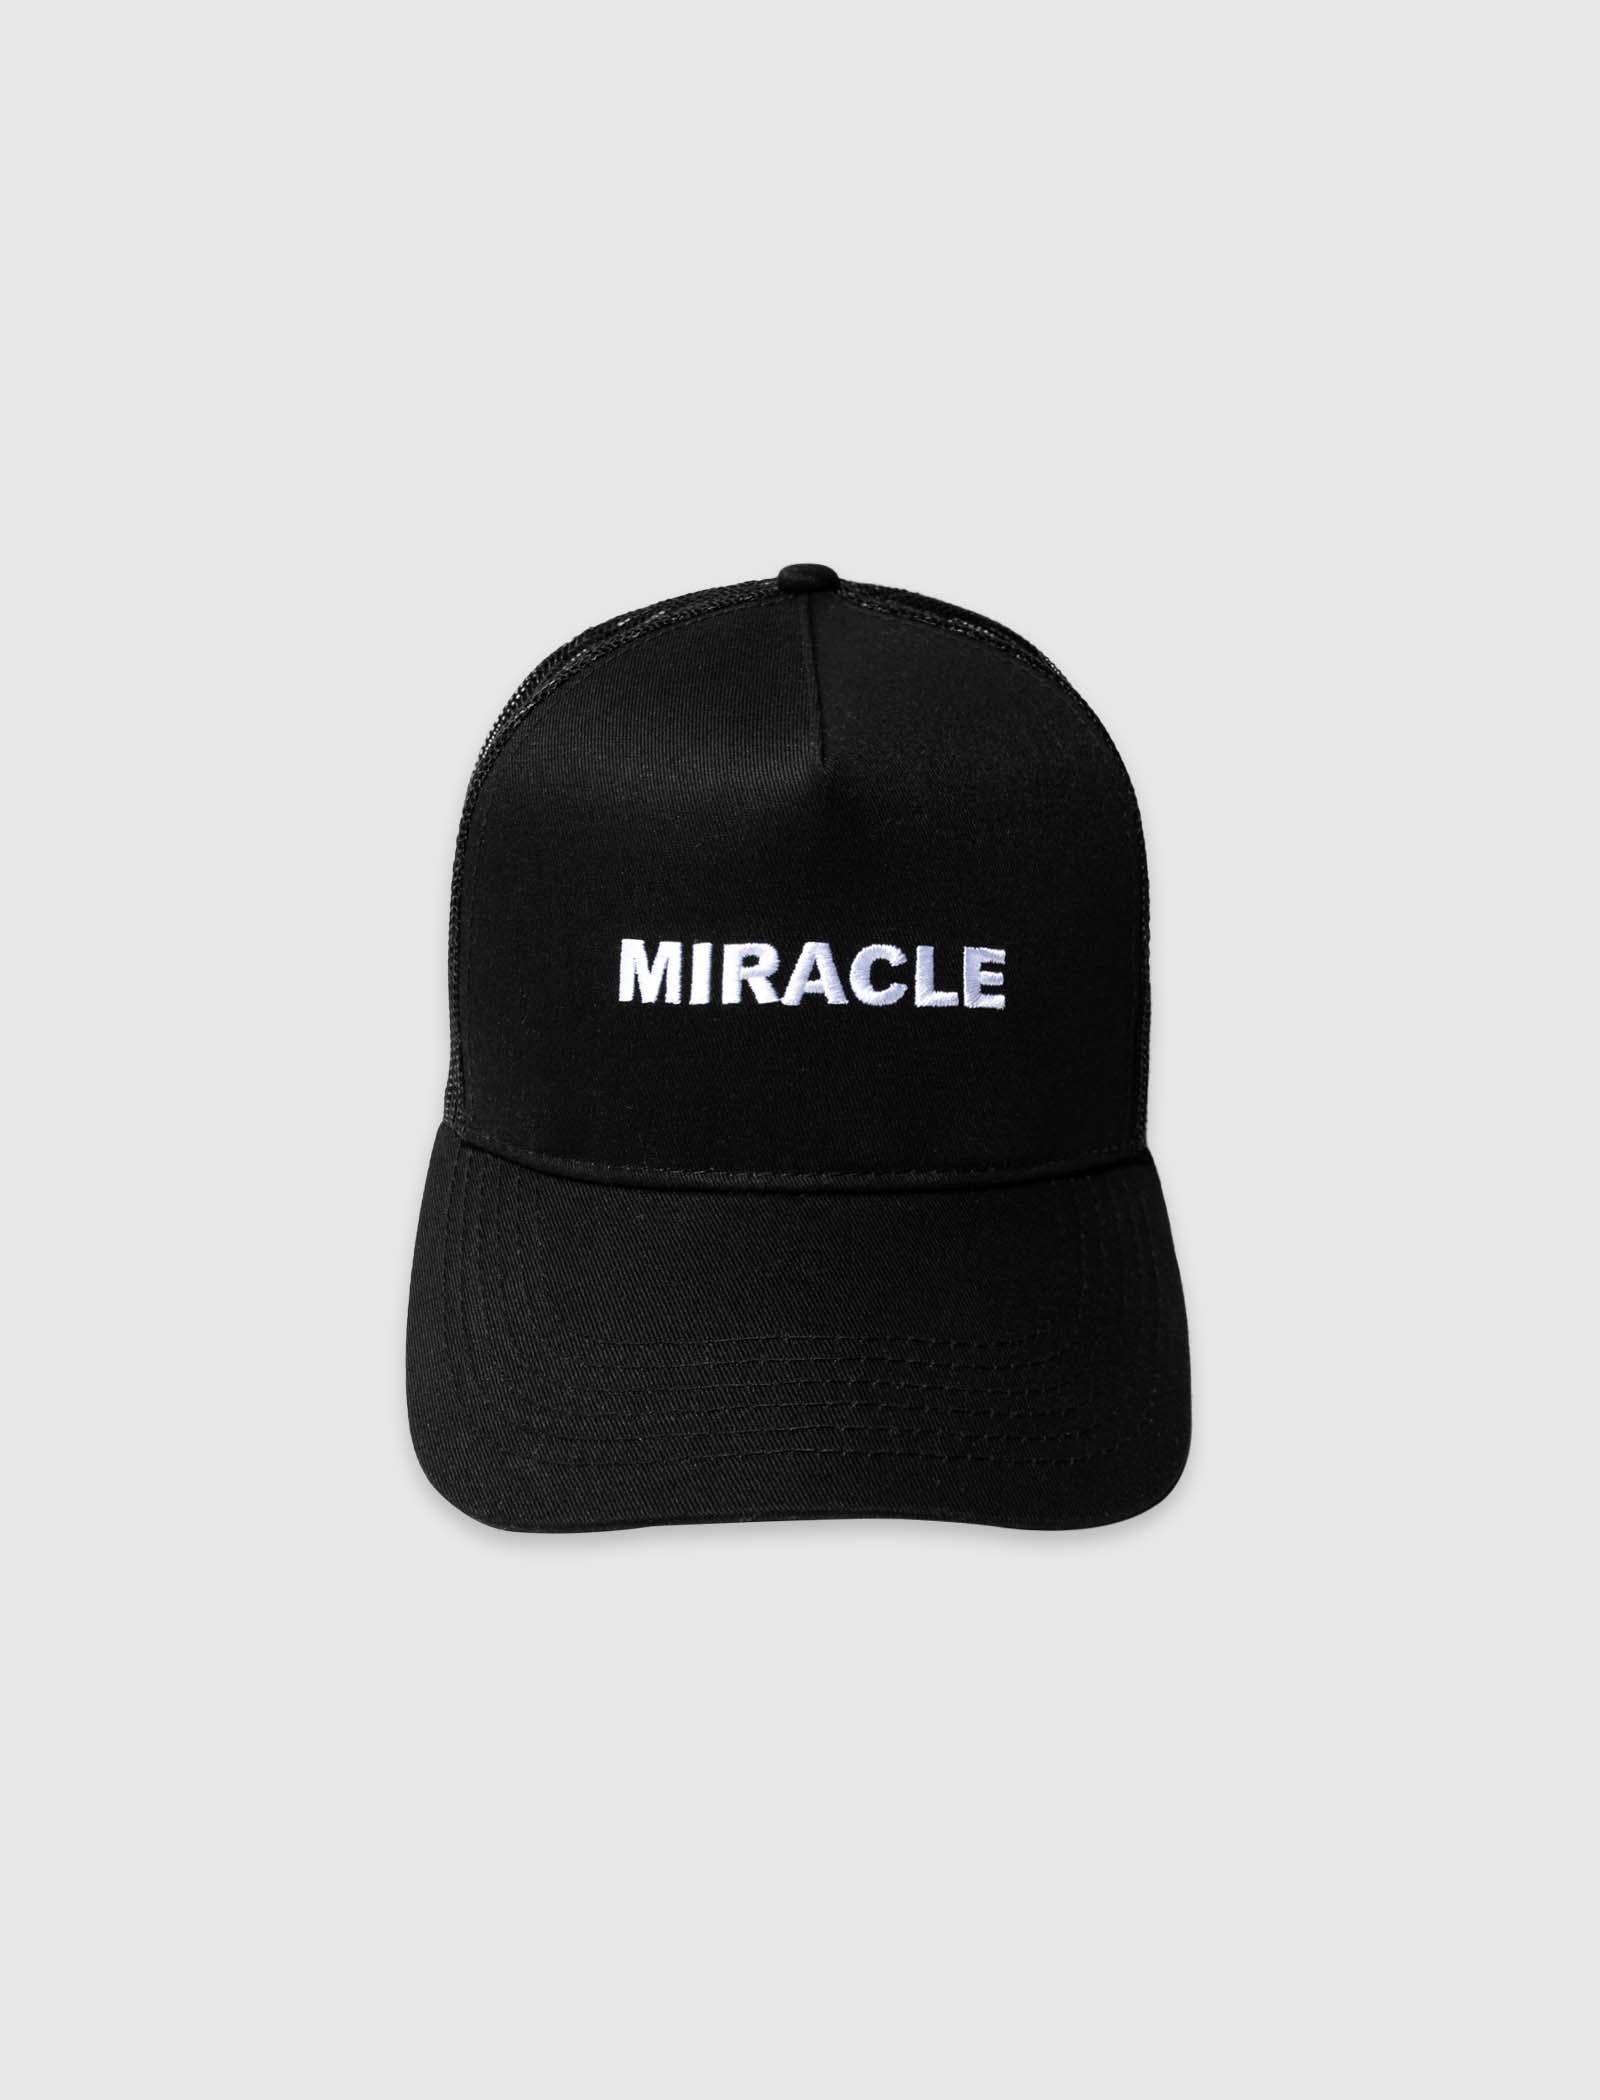 MIRACLE TRUCKER HAT